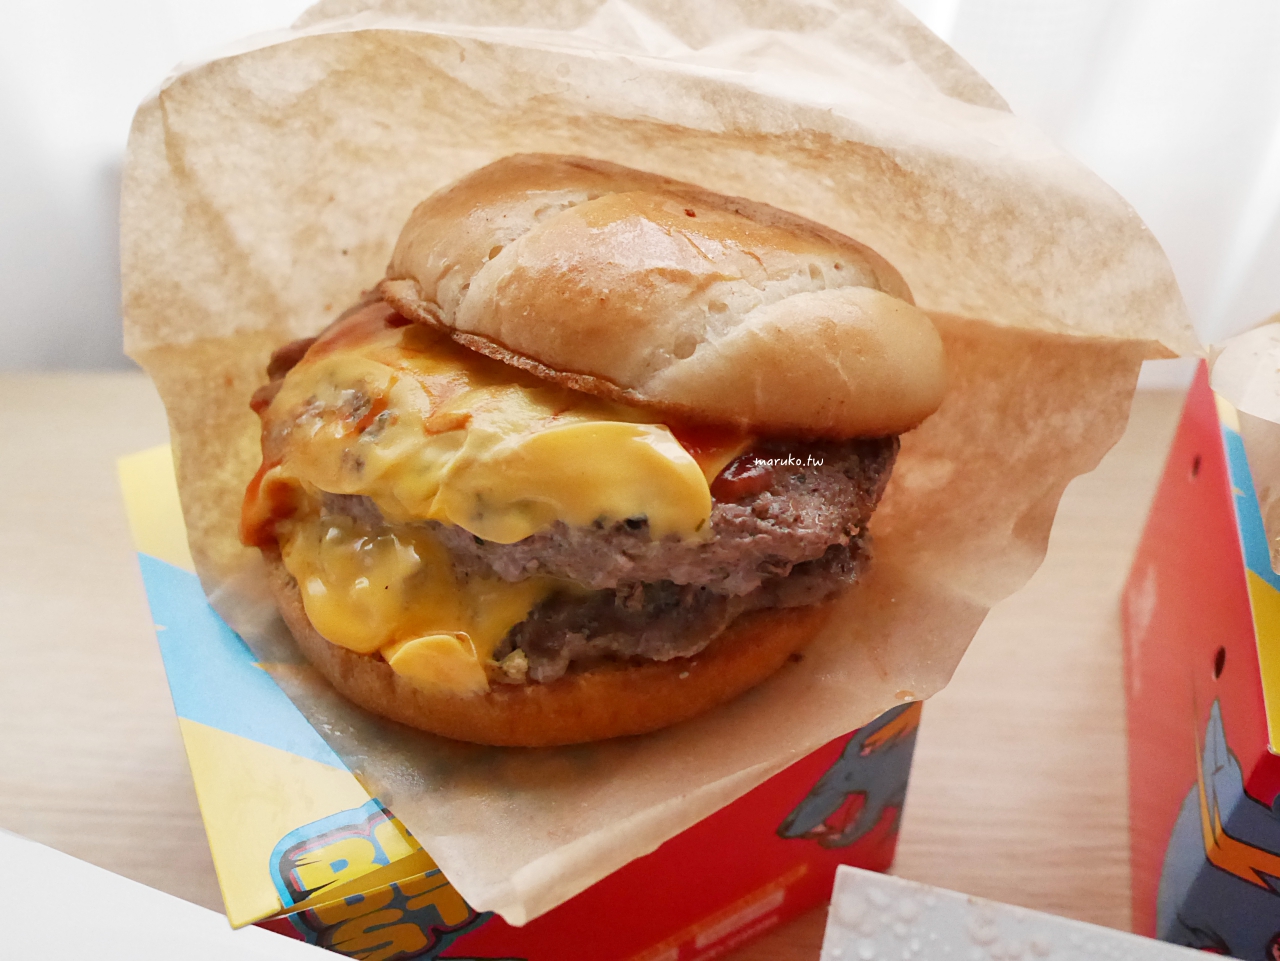 MrBeast Burger 來自美國全球超過1000家連鎖,網紅漢堡這樣點才吃的到 @Maruko與美食有個約會